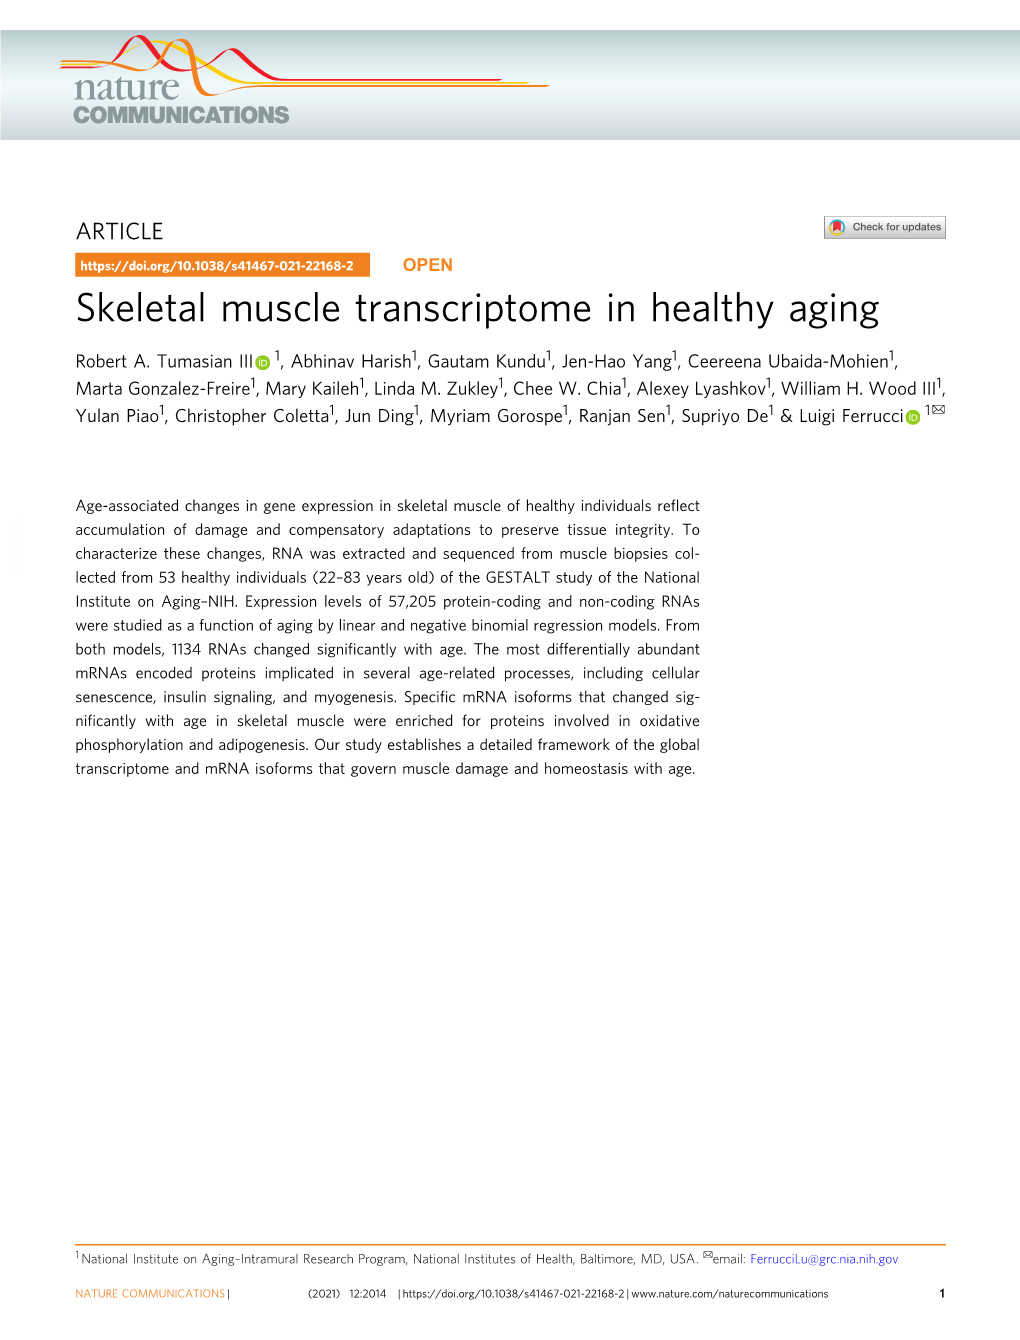 Skeletal Muscle Transcriptome in Healthy Aging